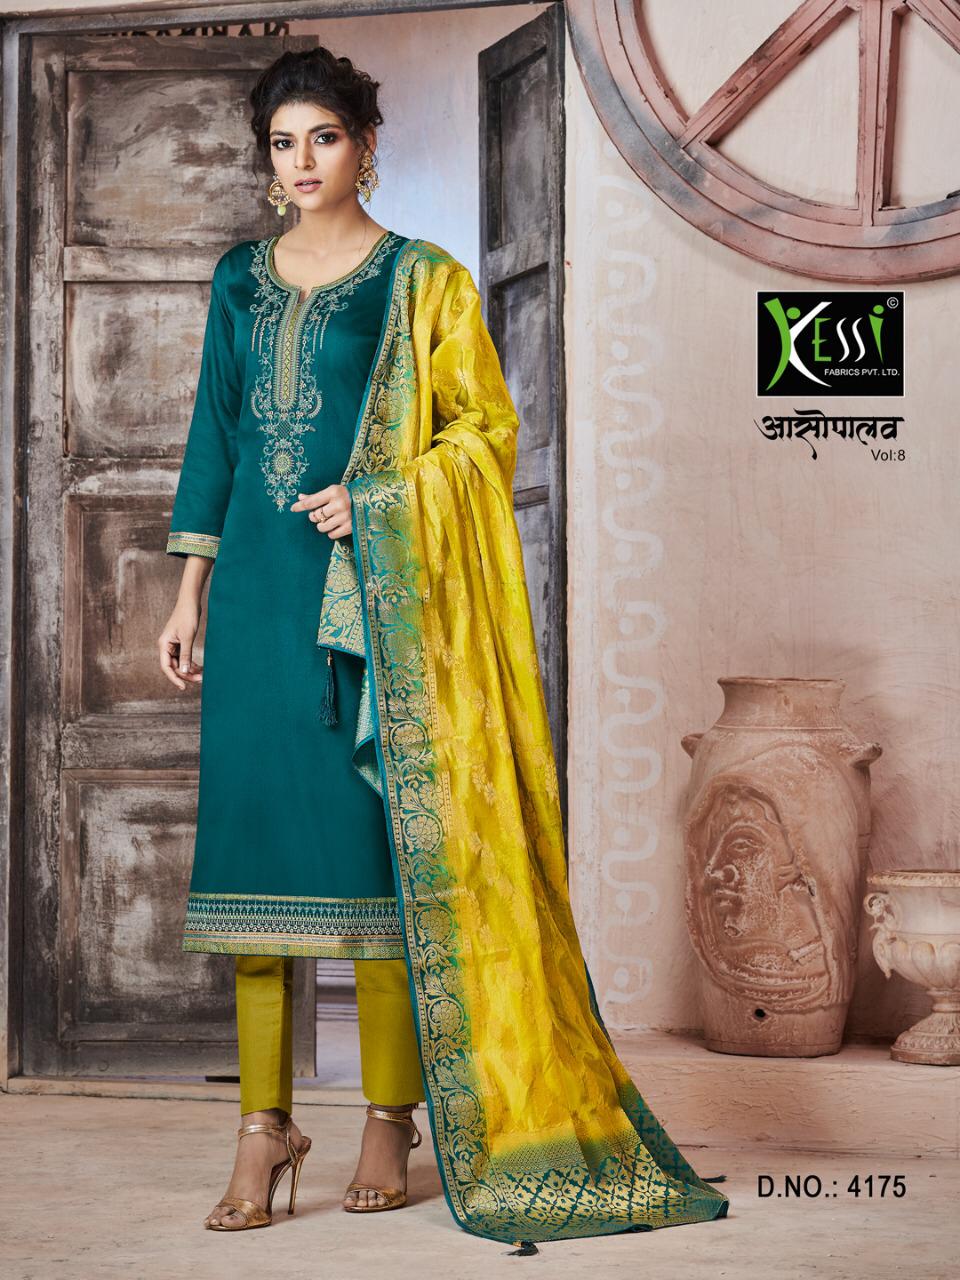 kessi fabrics asopalav vol 8 colorful fancy collection of salwaar suits